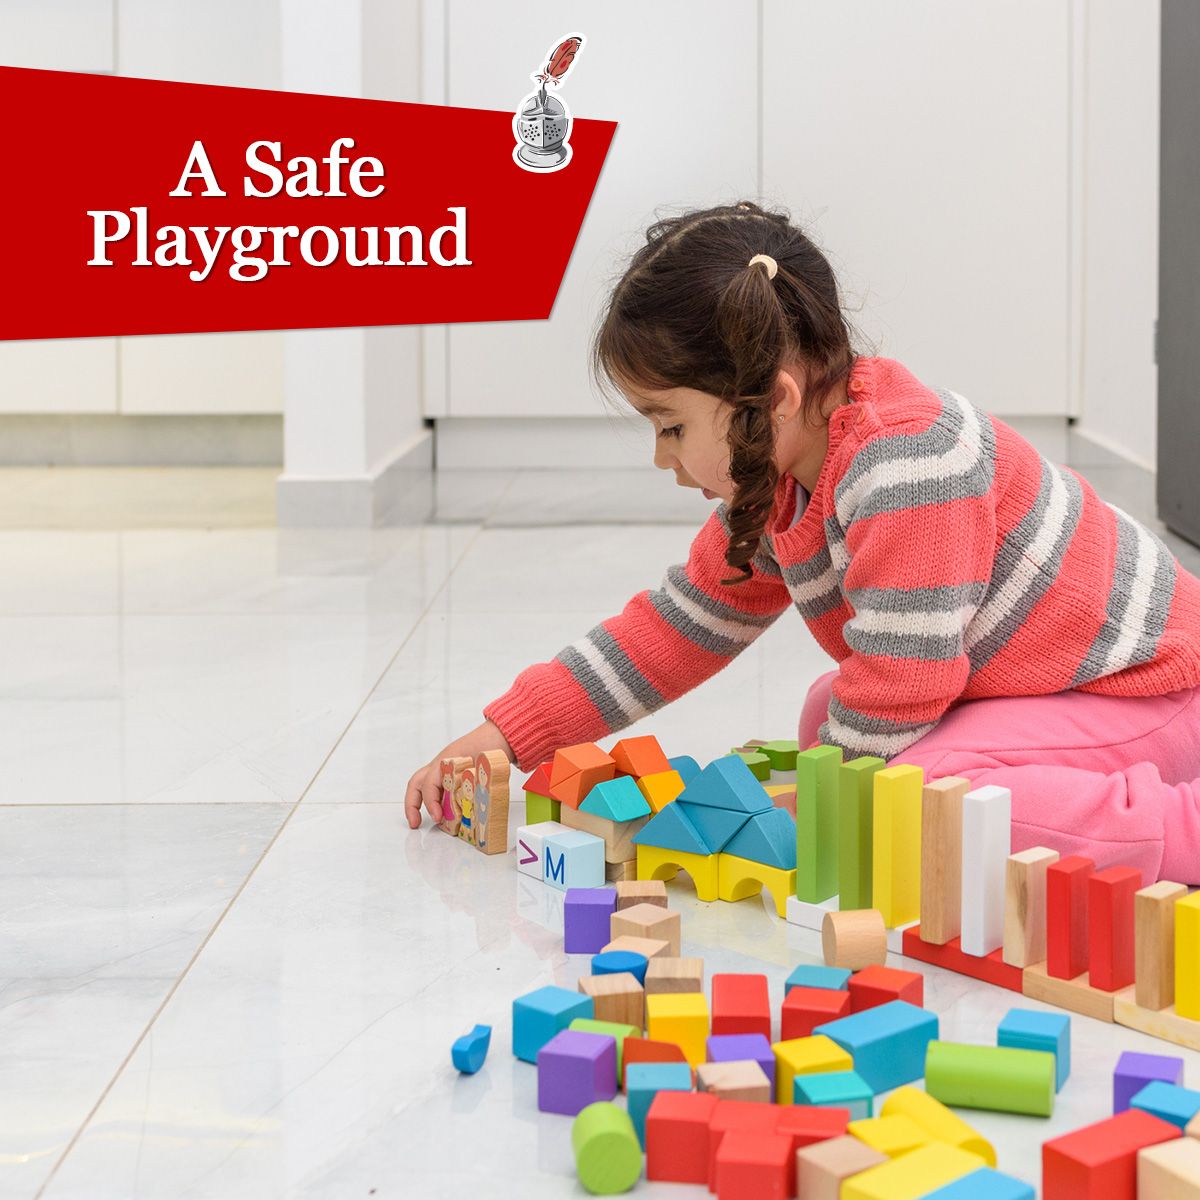 A Safe Playground